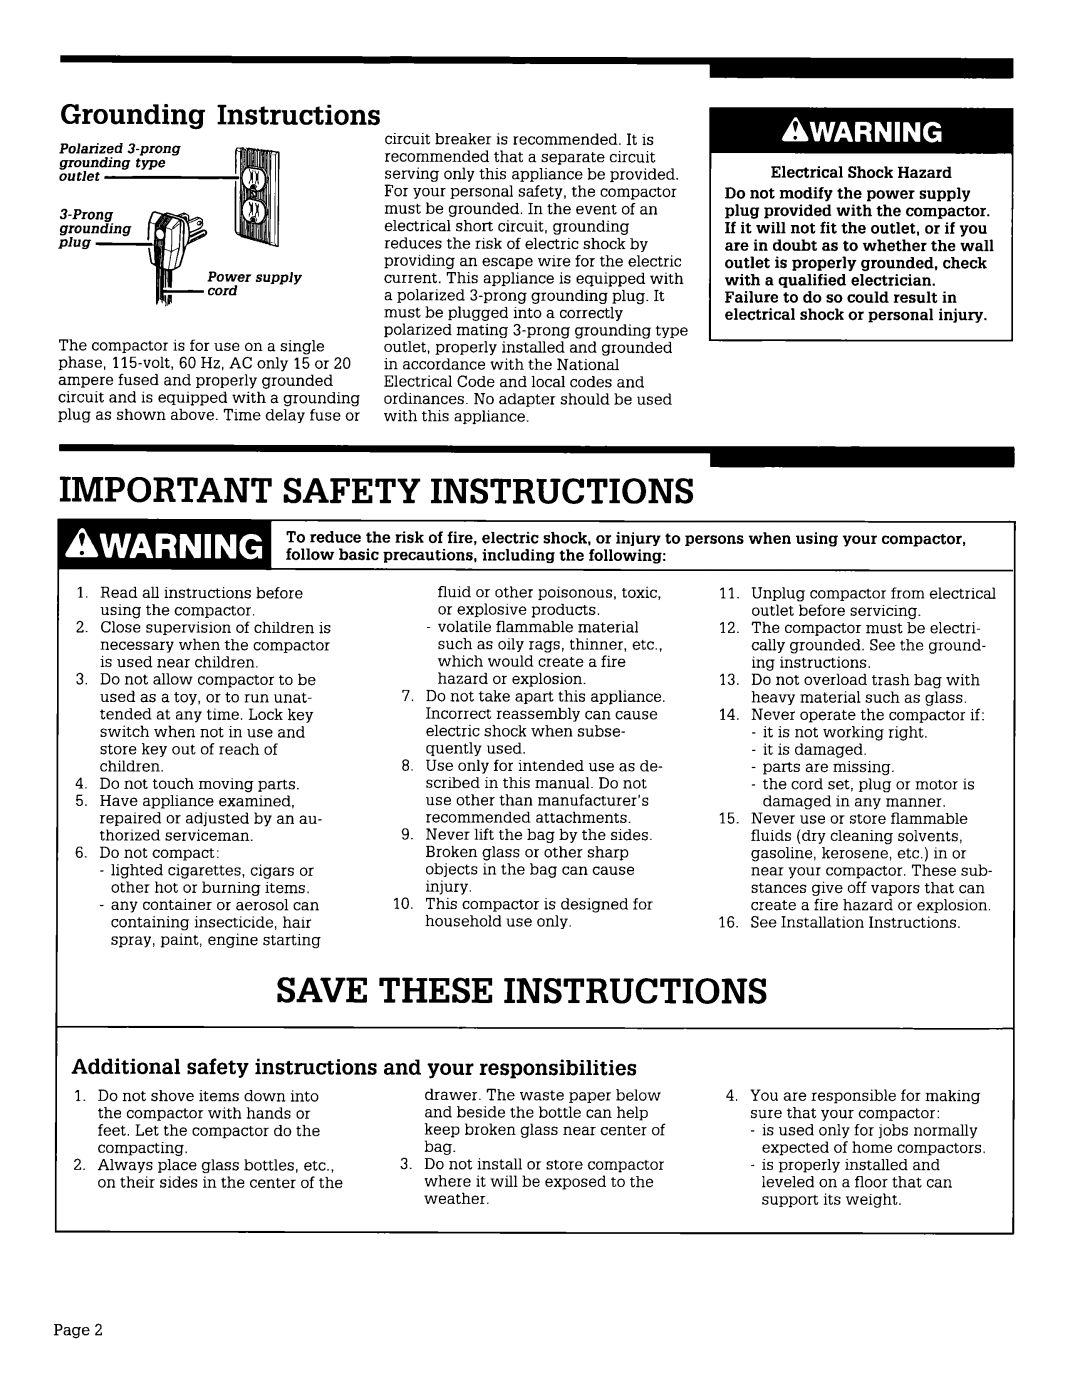 Roper KU155OV Grounding Instructions, Additional safety instructions, responsibilities, Important Safety Instructions 